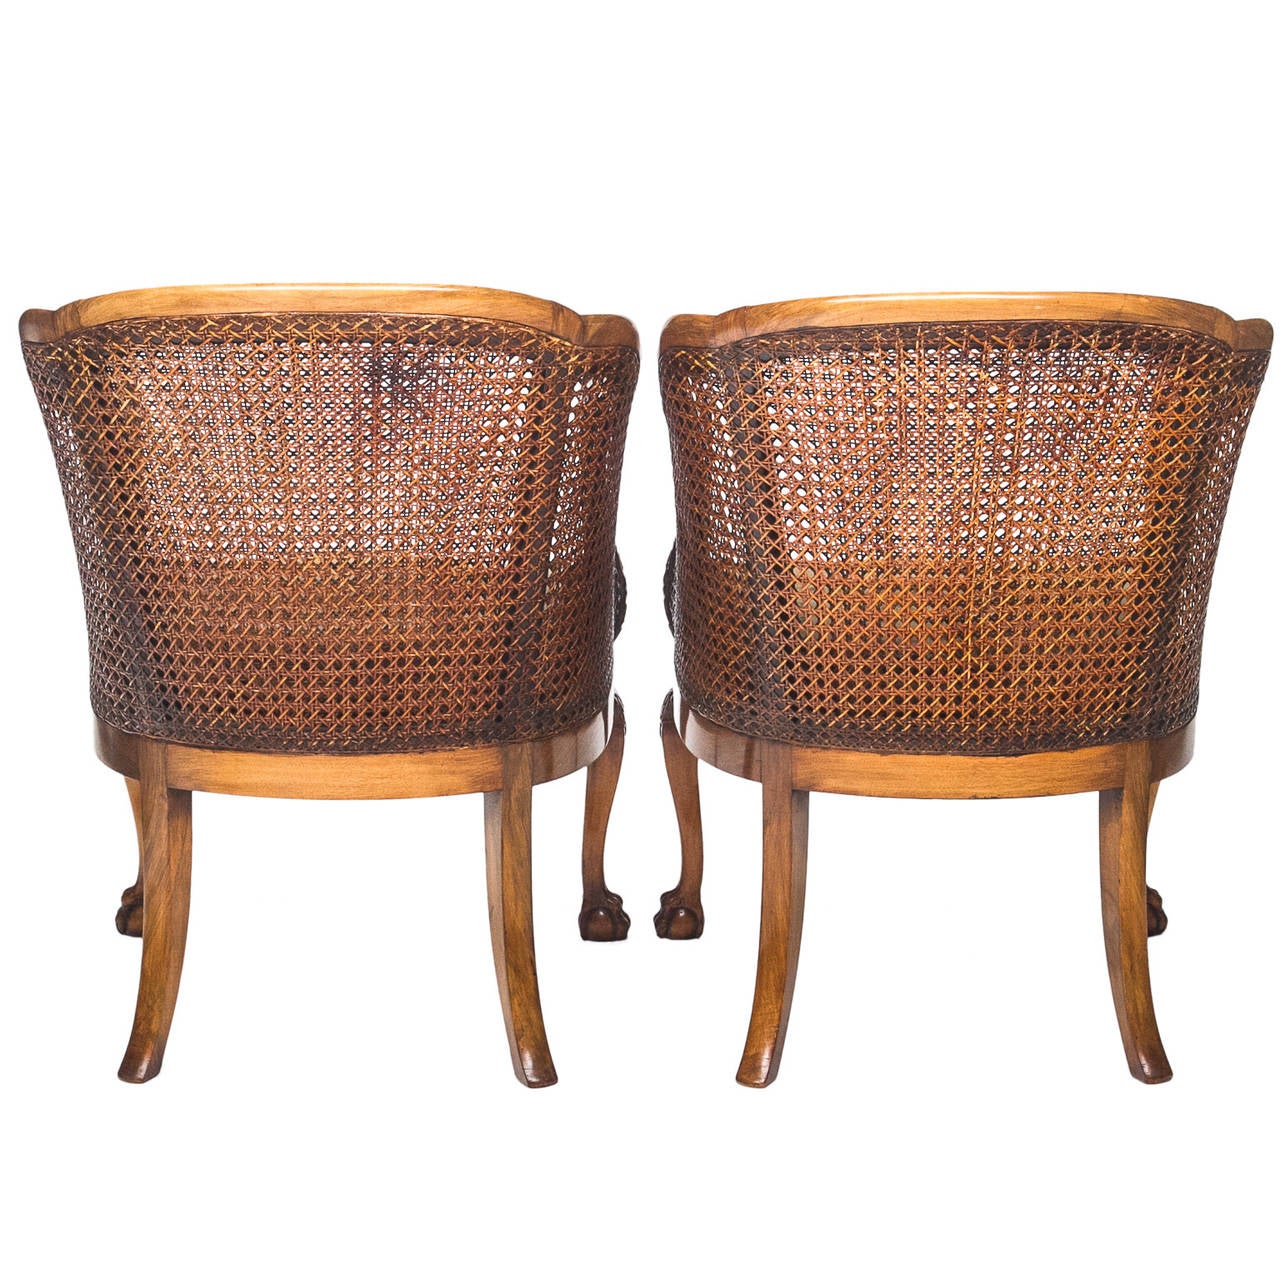 English Georgian Style Walnut and Cane Barrel Back Chairs with Cushion